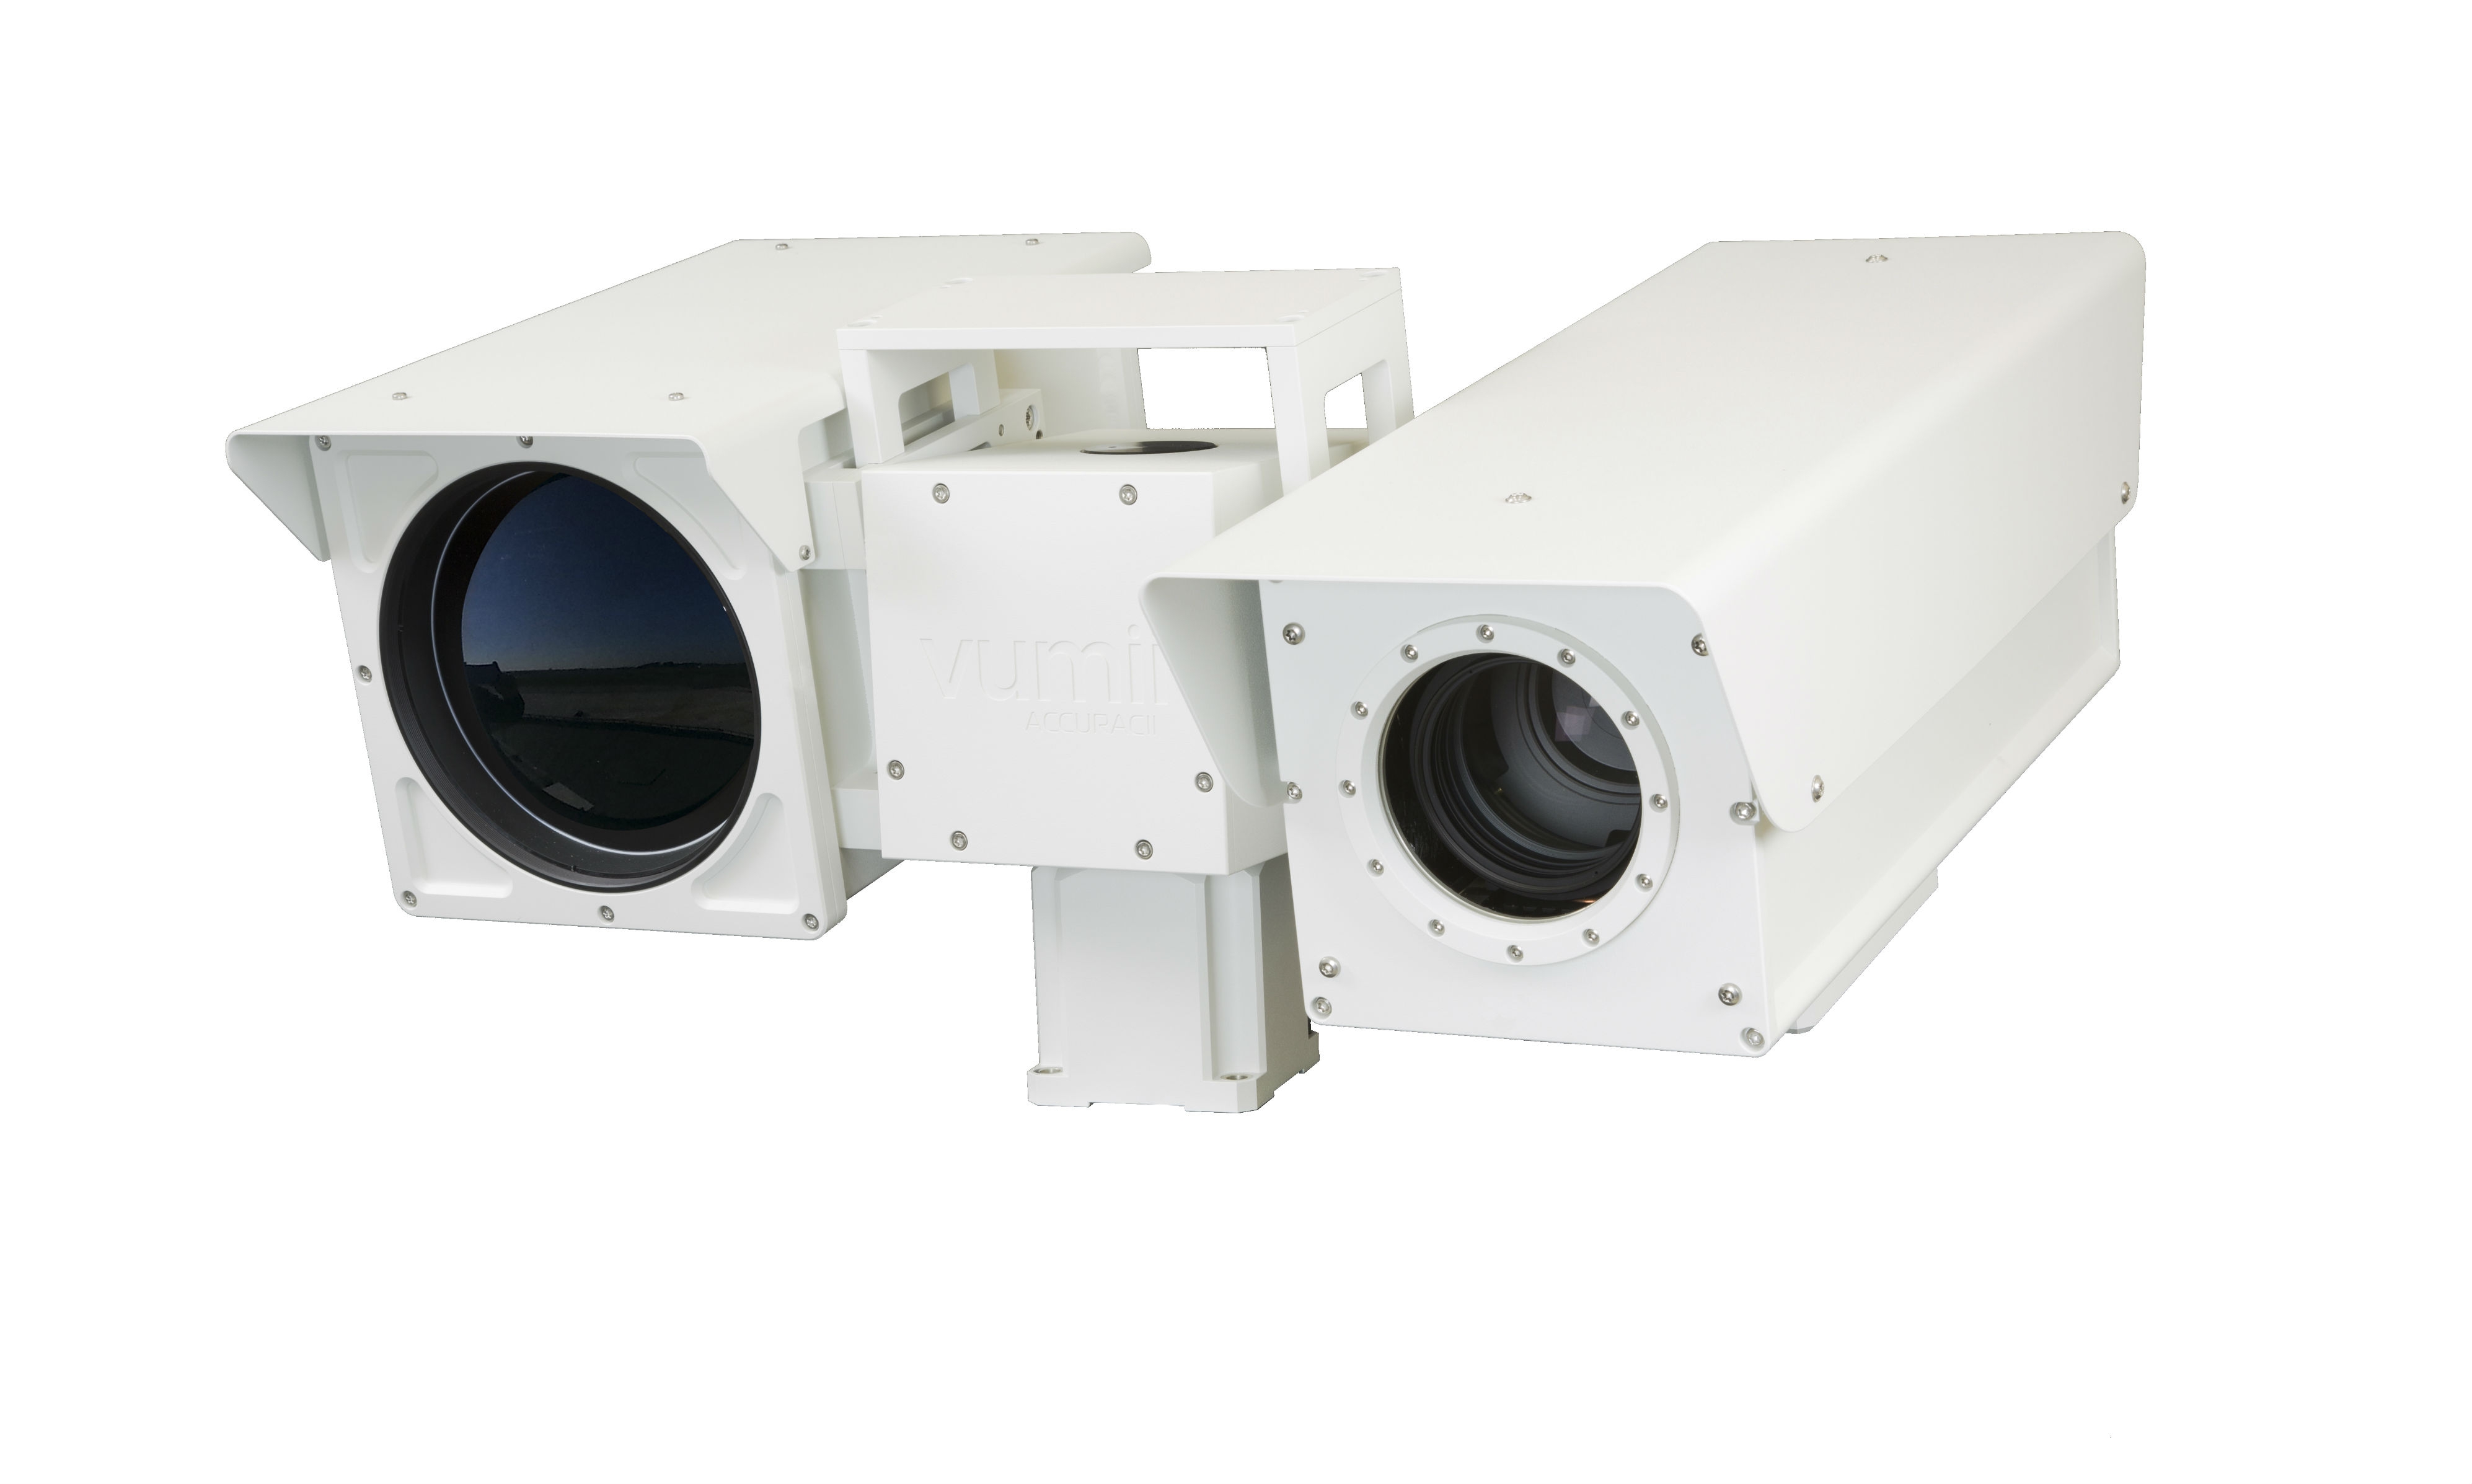 Caption:The Accuracii XRU long range multi-sensor camera system provides cost effective border security surveillance